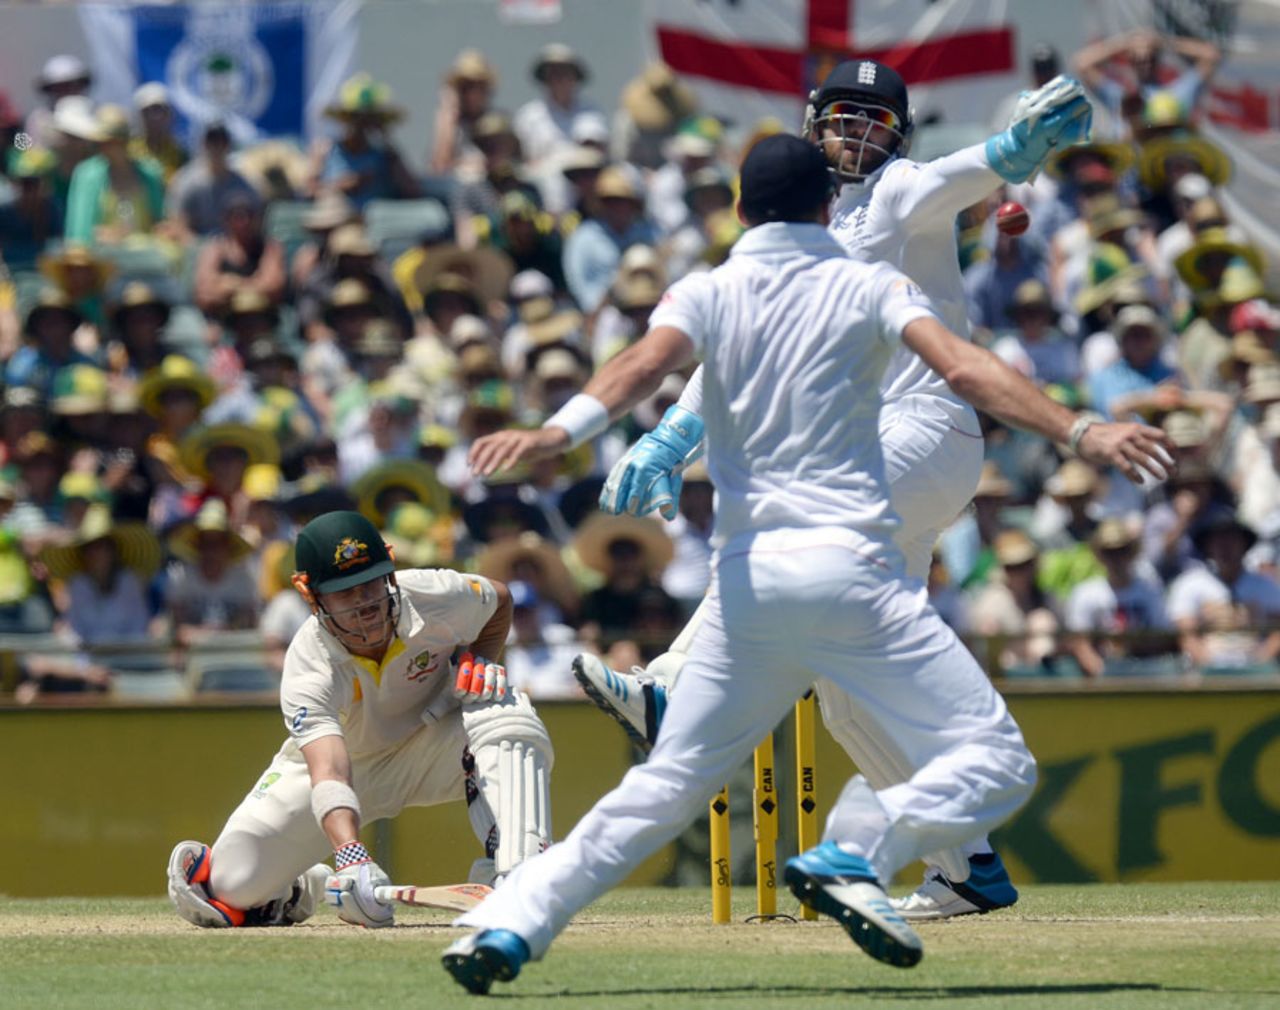 Matt Prior missed the chance to stump David Warner, Australia v England, 3rd Test, Perth, 3rd day, December 15, 2013